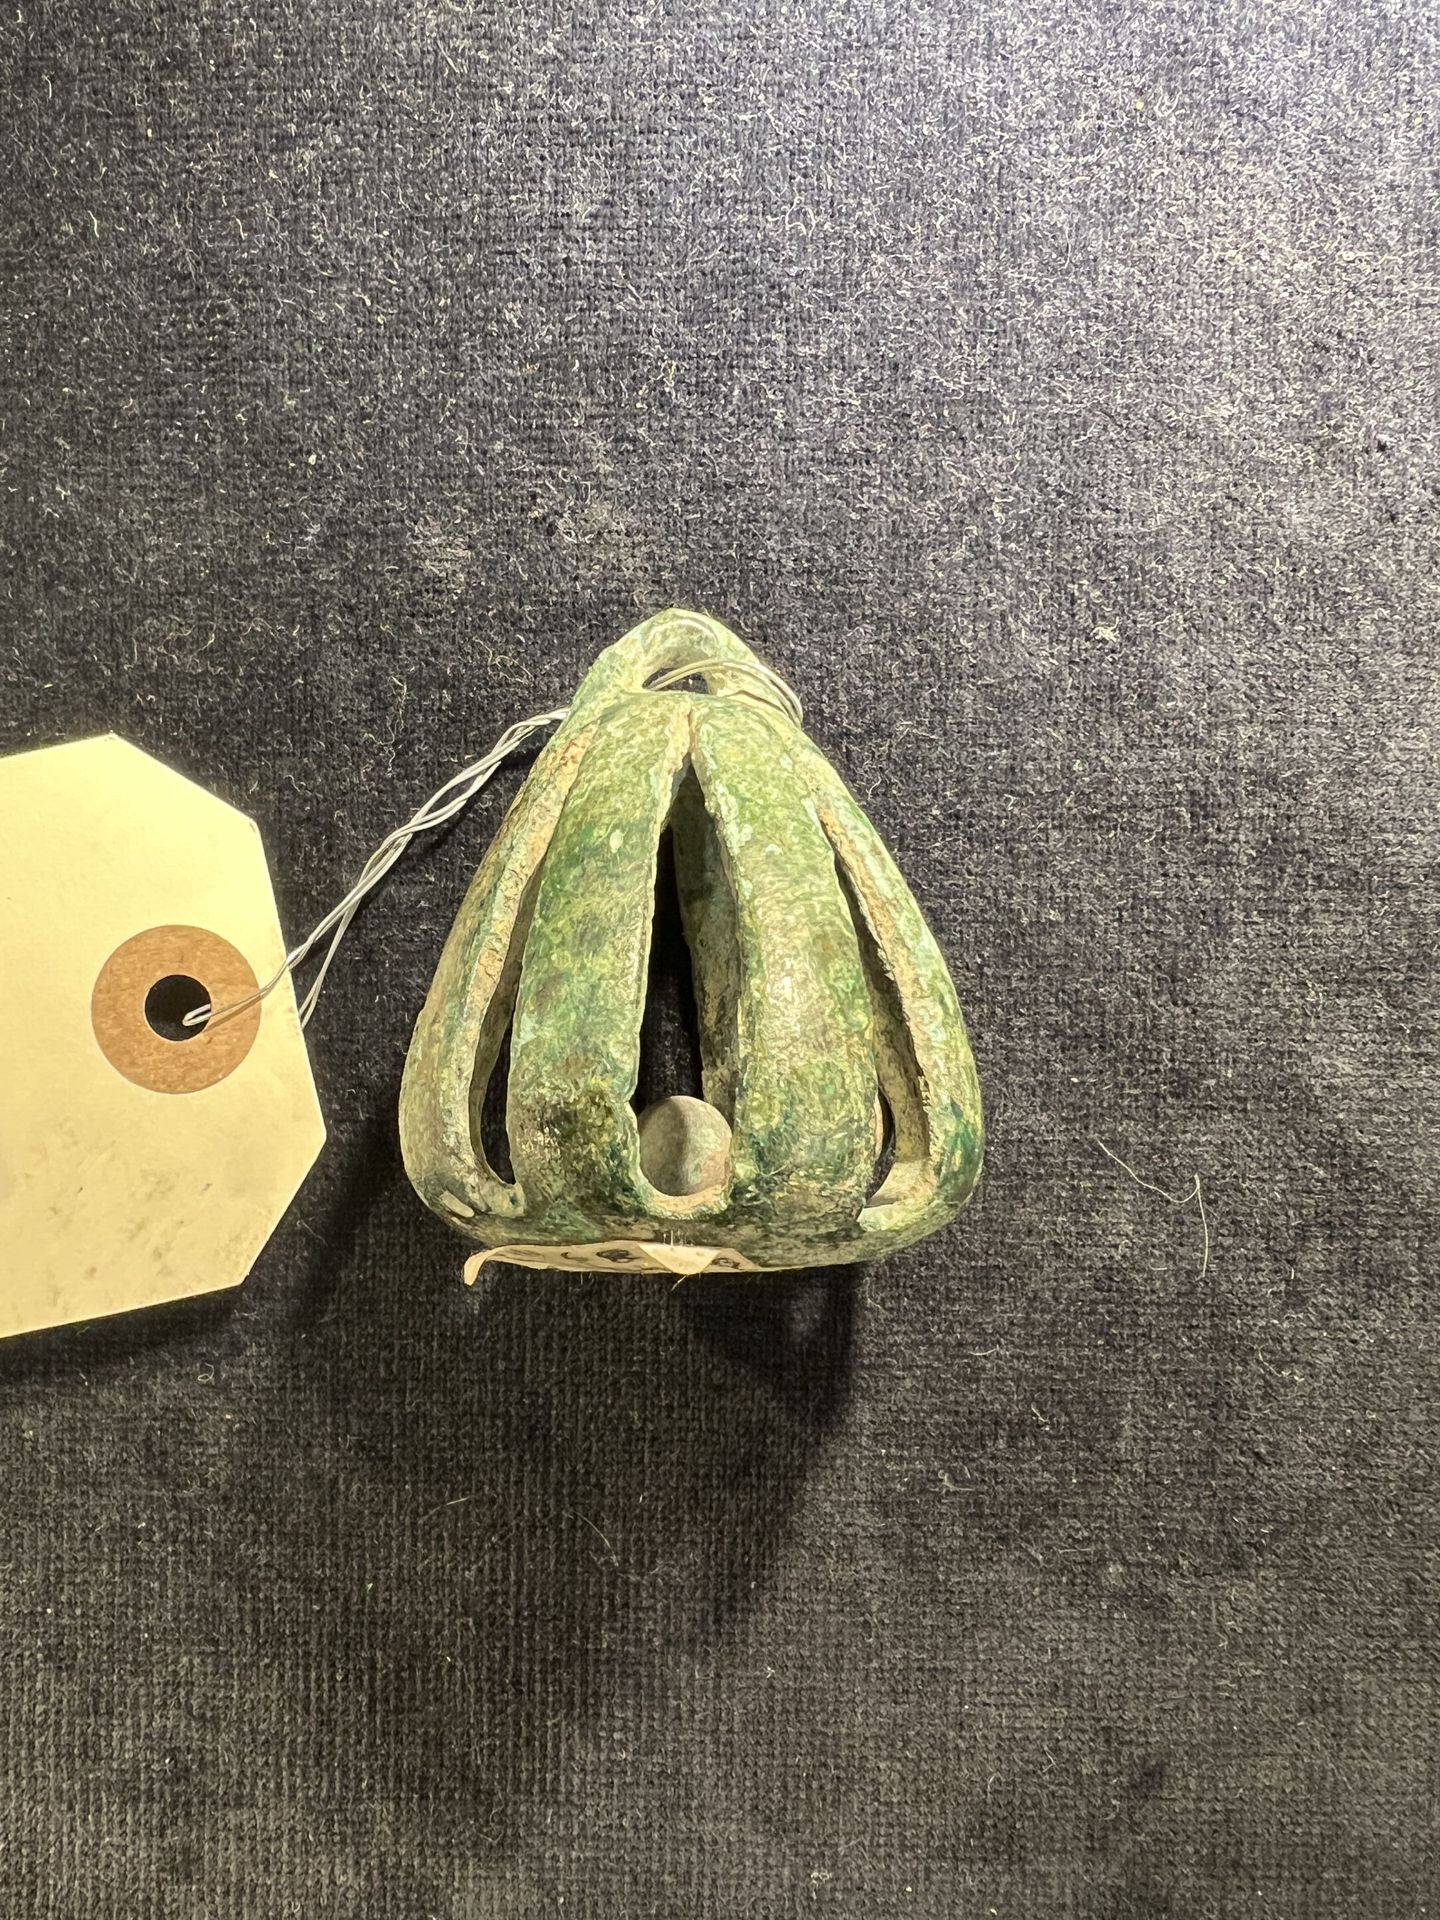 Null LURISTÁN - ca. 1000-500 a.C.
Campana de carro de bronce patinado verde, cón&hellip;